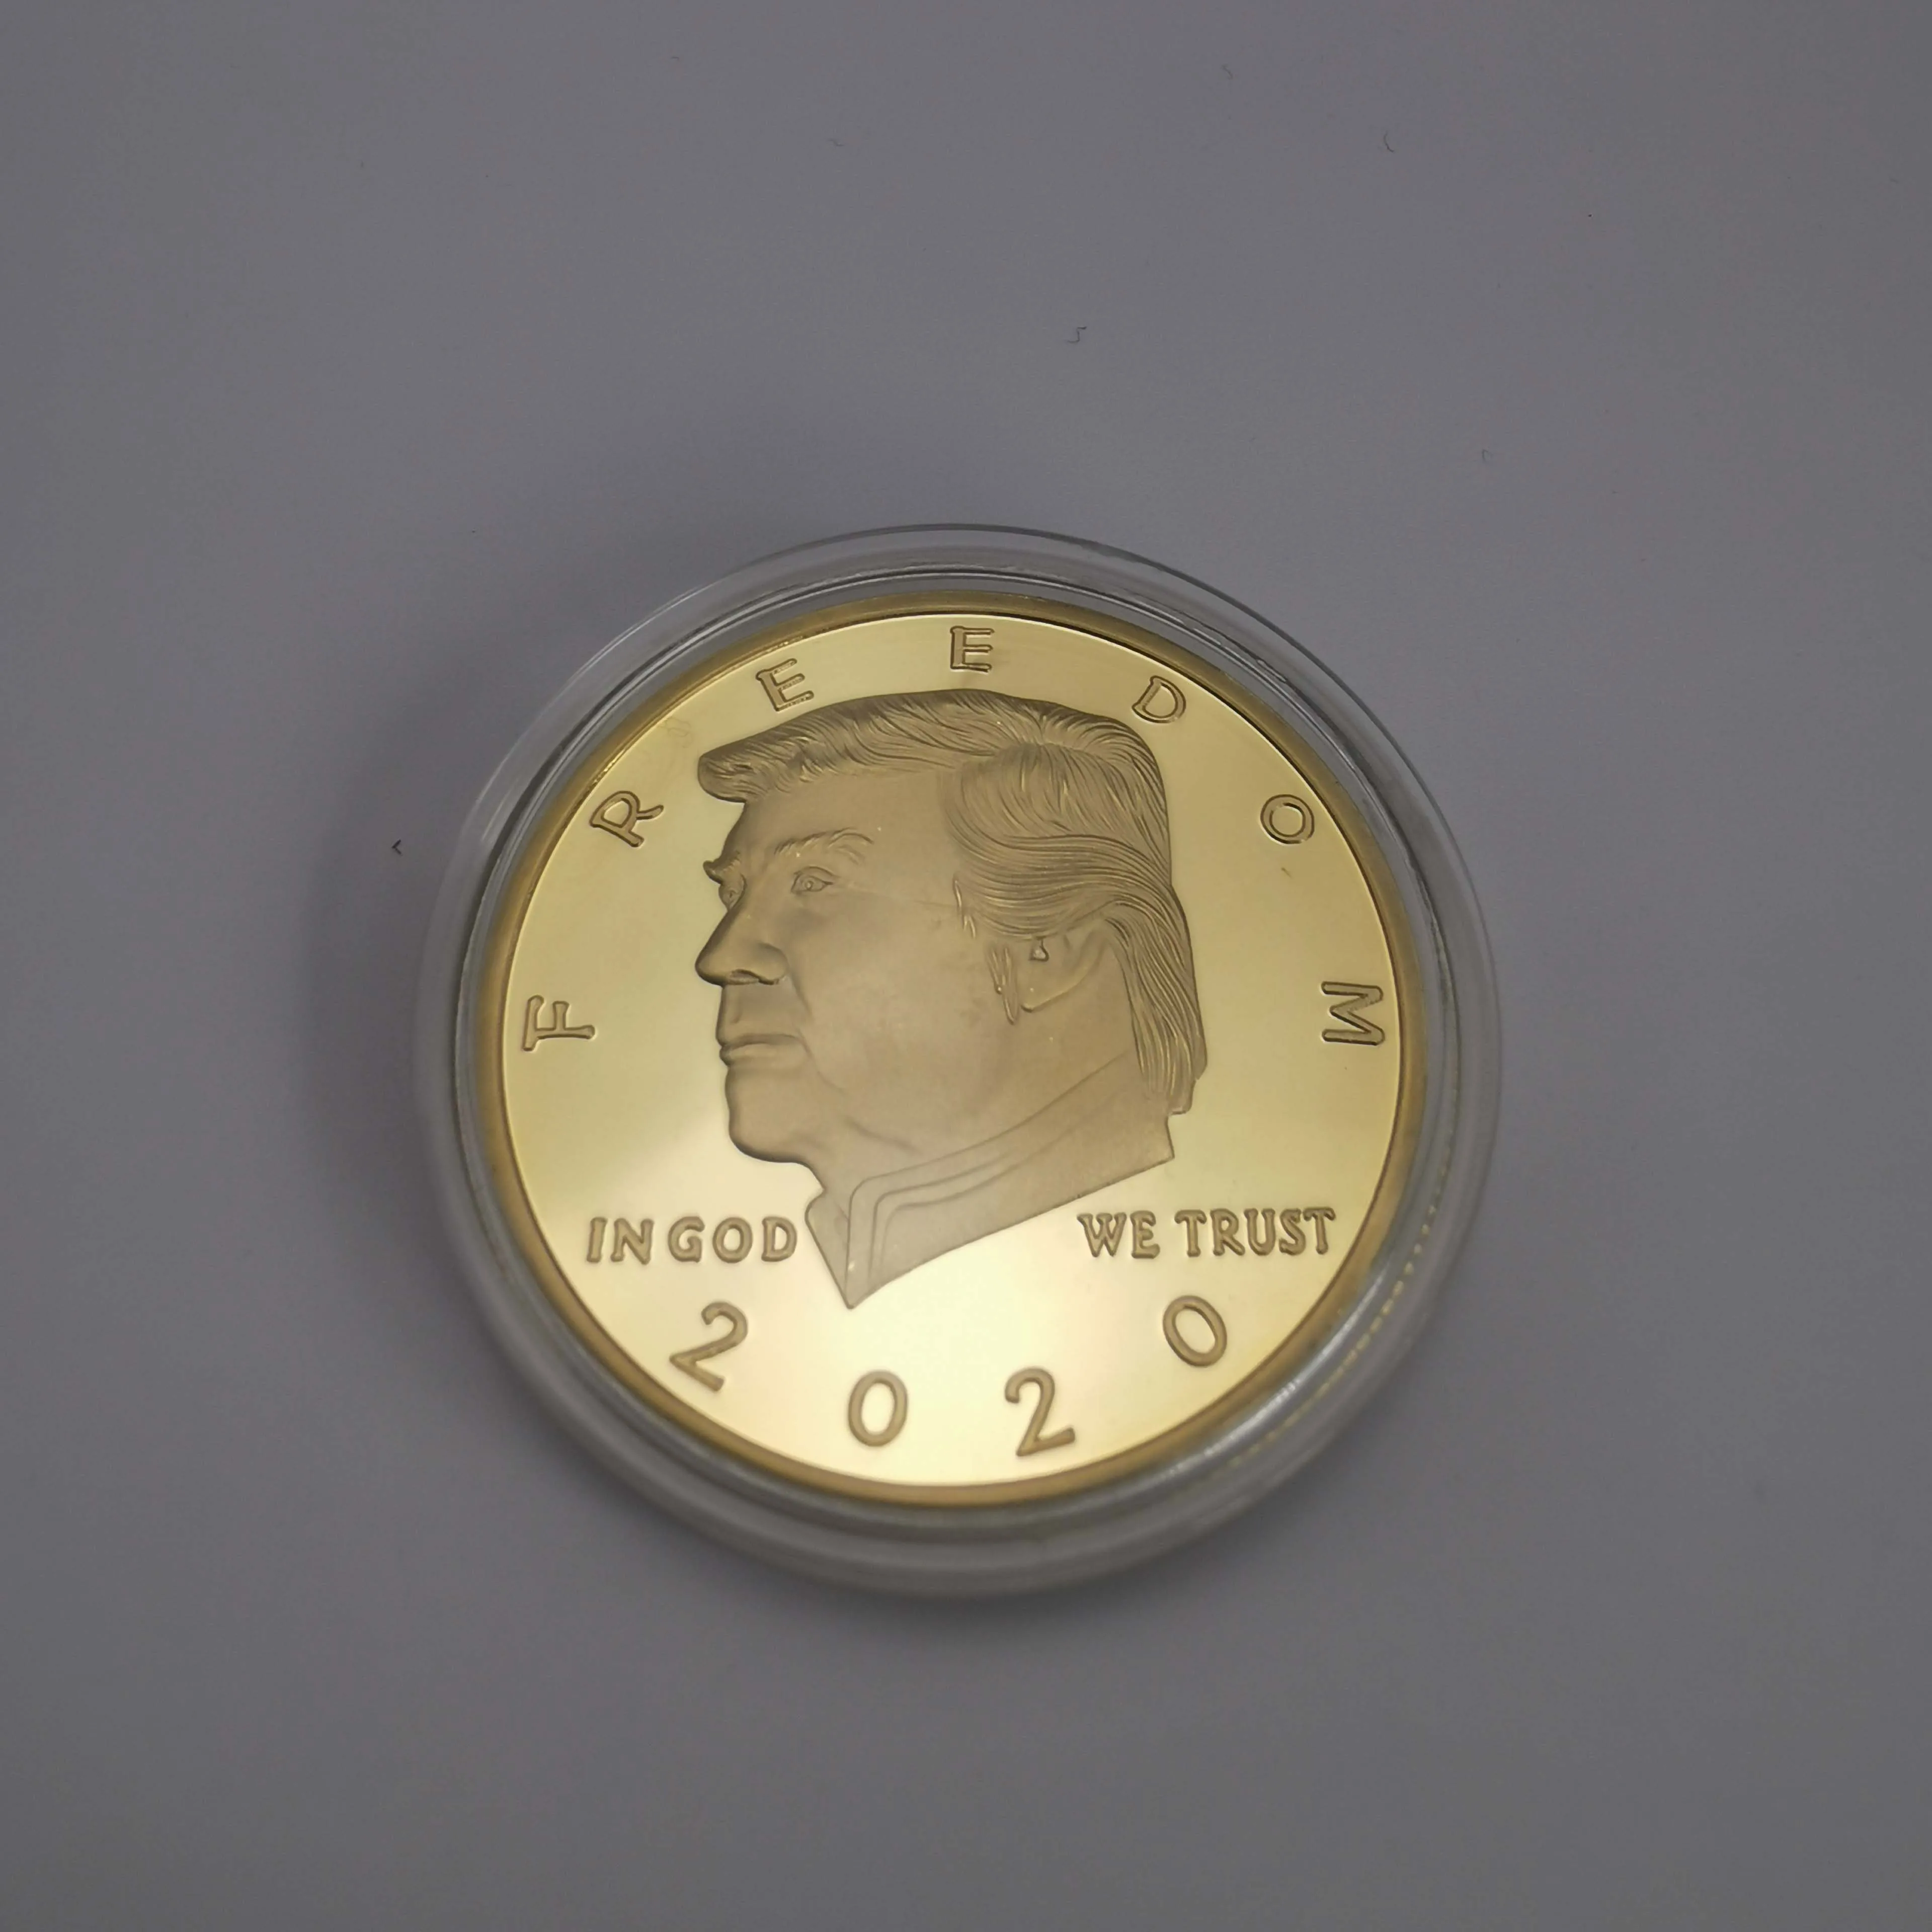 PRESIDENT TRUMP 2nd Amendment FREEDOM 2018 Gold Coin Nice! 